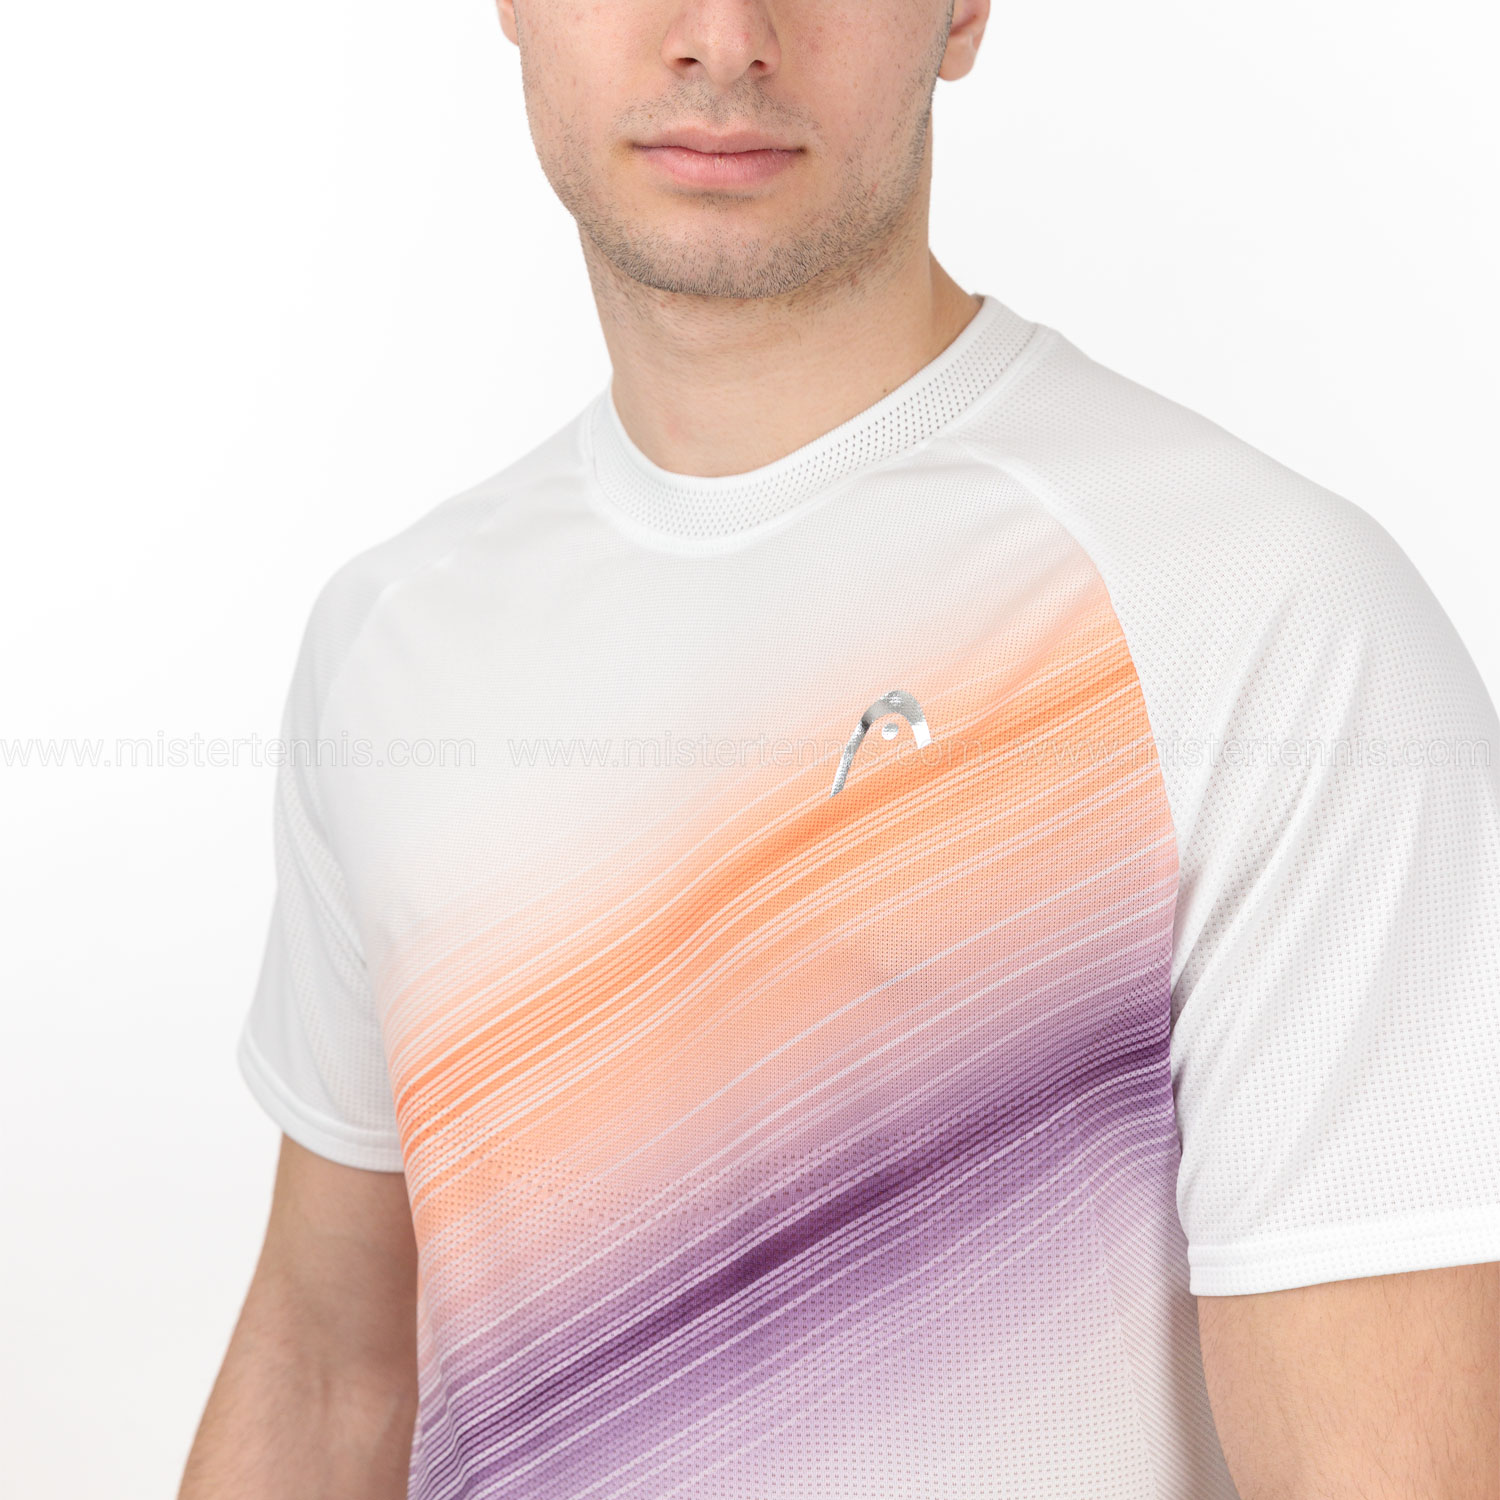 Head Performance Logo T-Shirt - Print Perf M/White